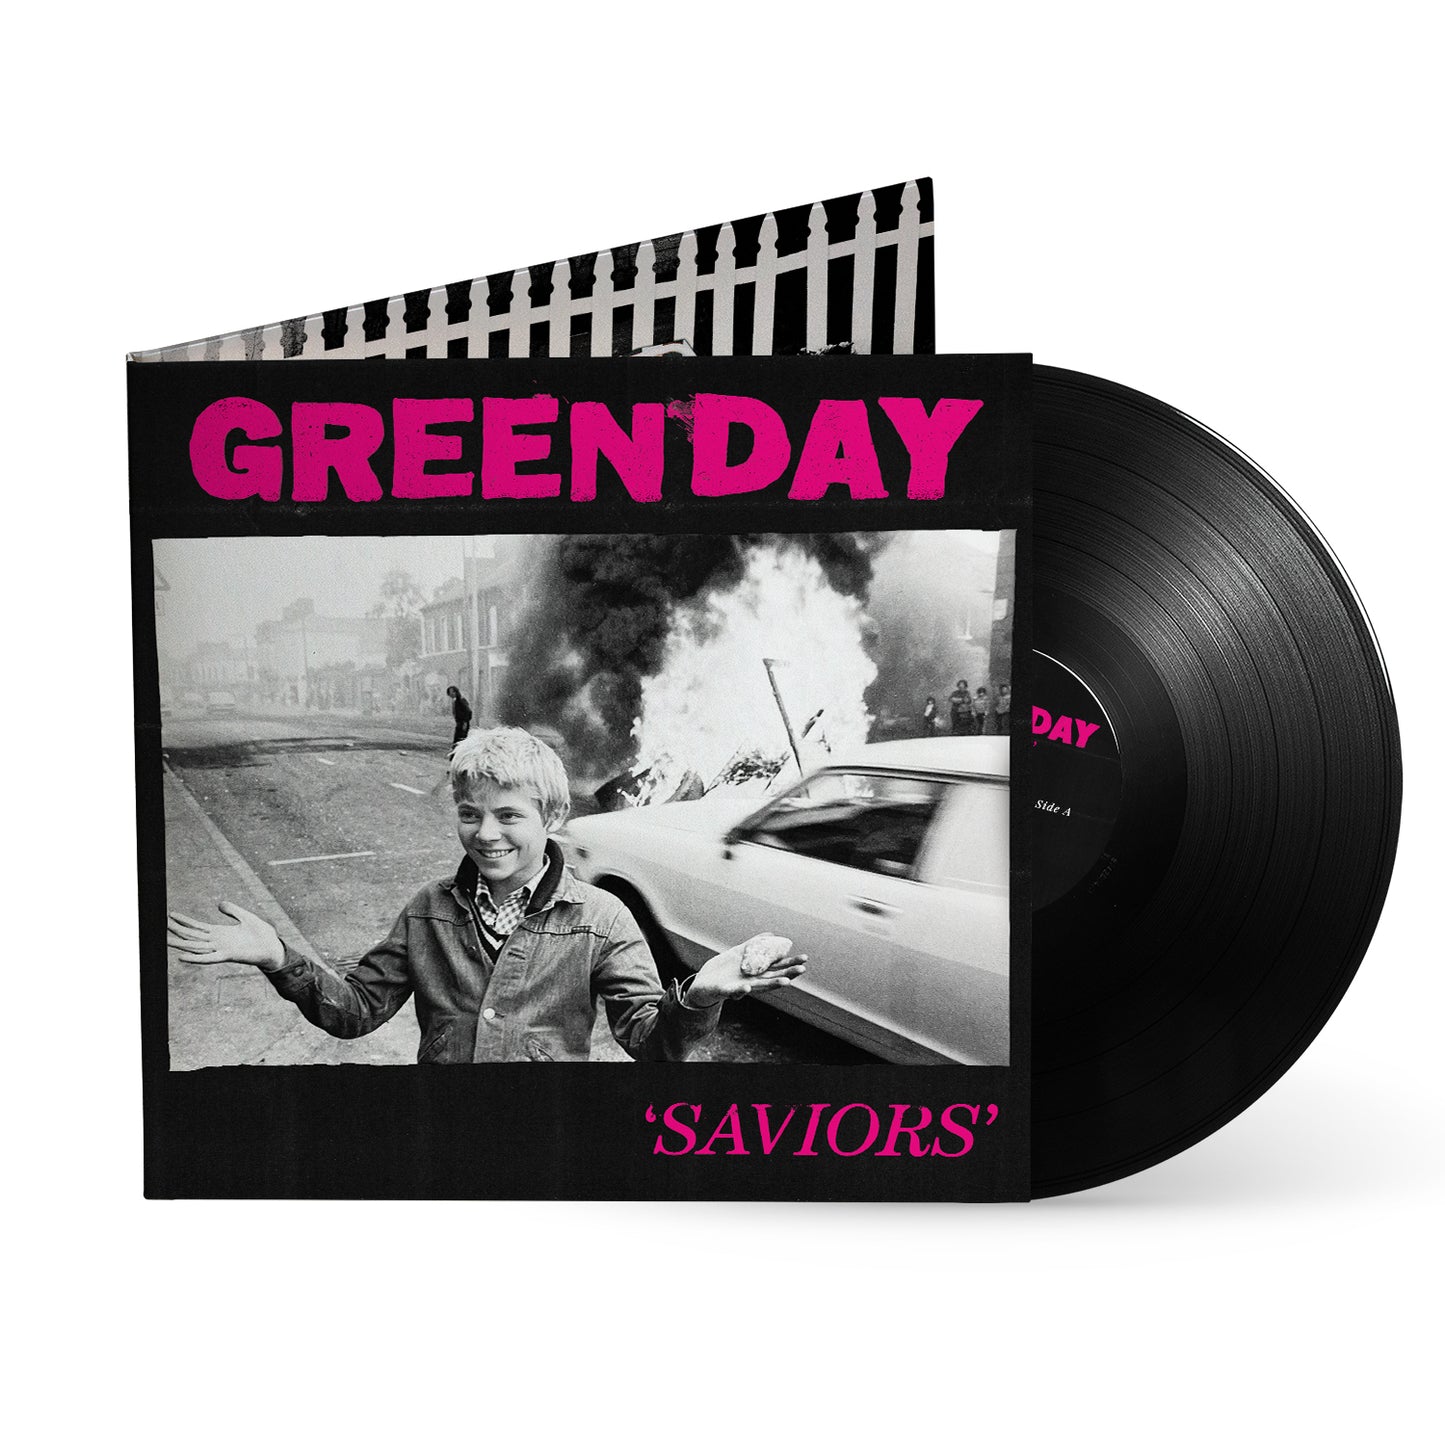 Green Day Saviors (Deluxe, 180 Gram Vinyl, Gatefold, Embossed Cover, Exclusive 24x36 Poster)